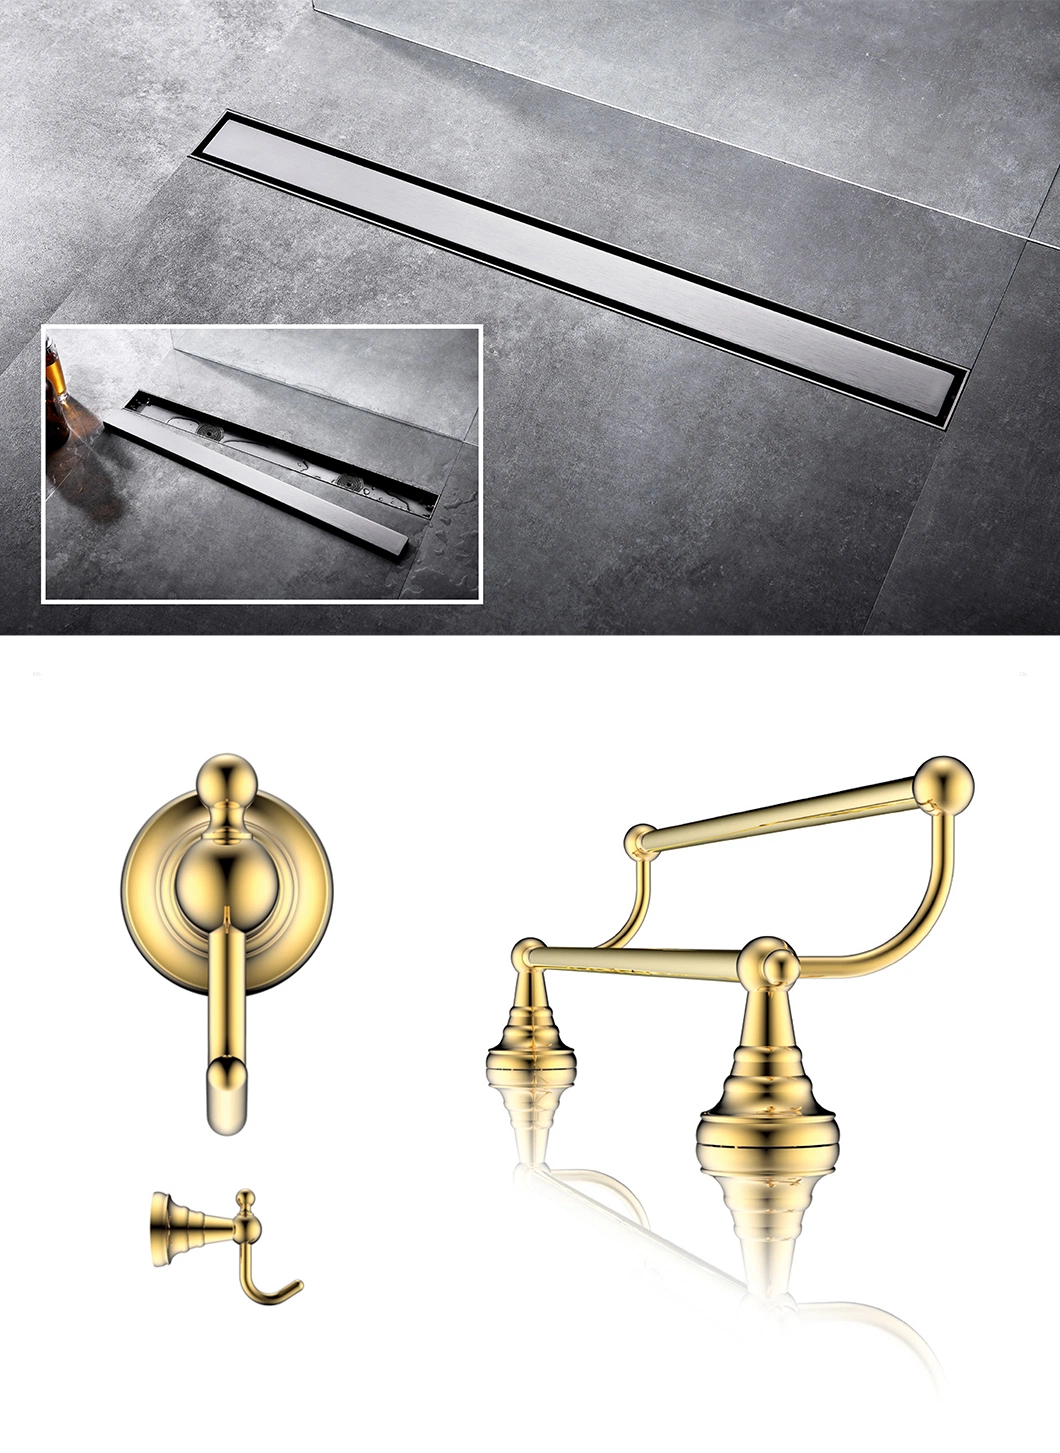 Ablinox Manufacturer Modern Design Easy Installation Stainless Steel Door Handle Bathroom Accessories